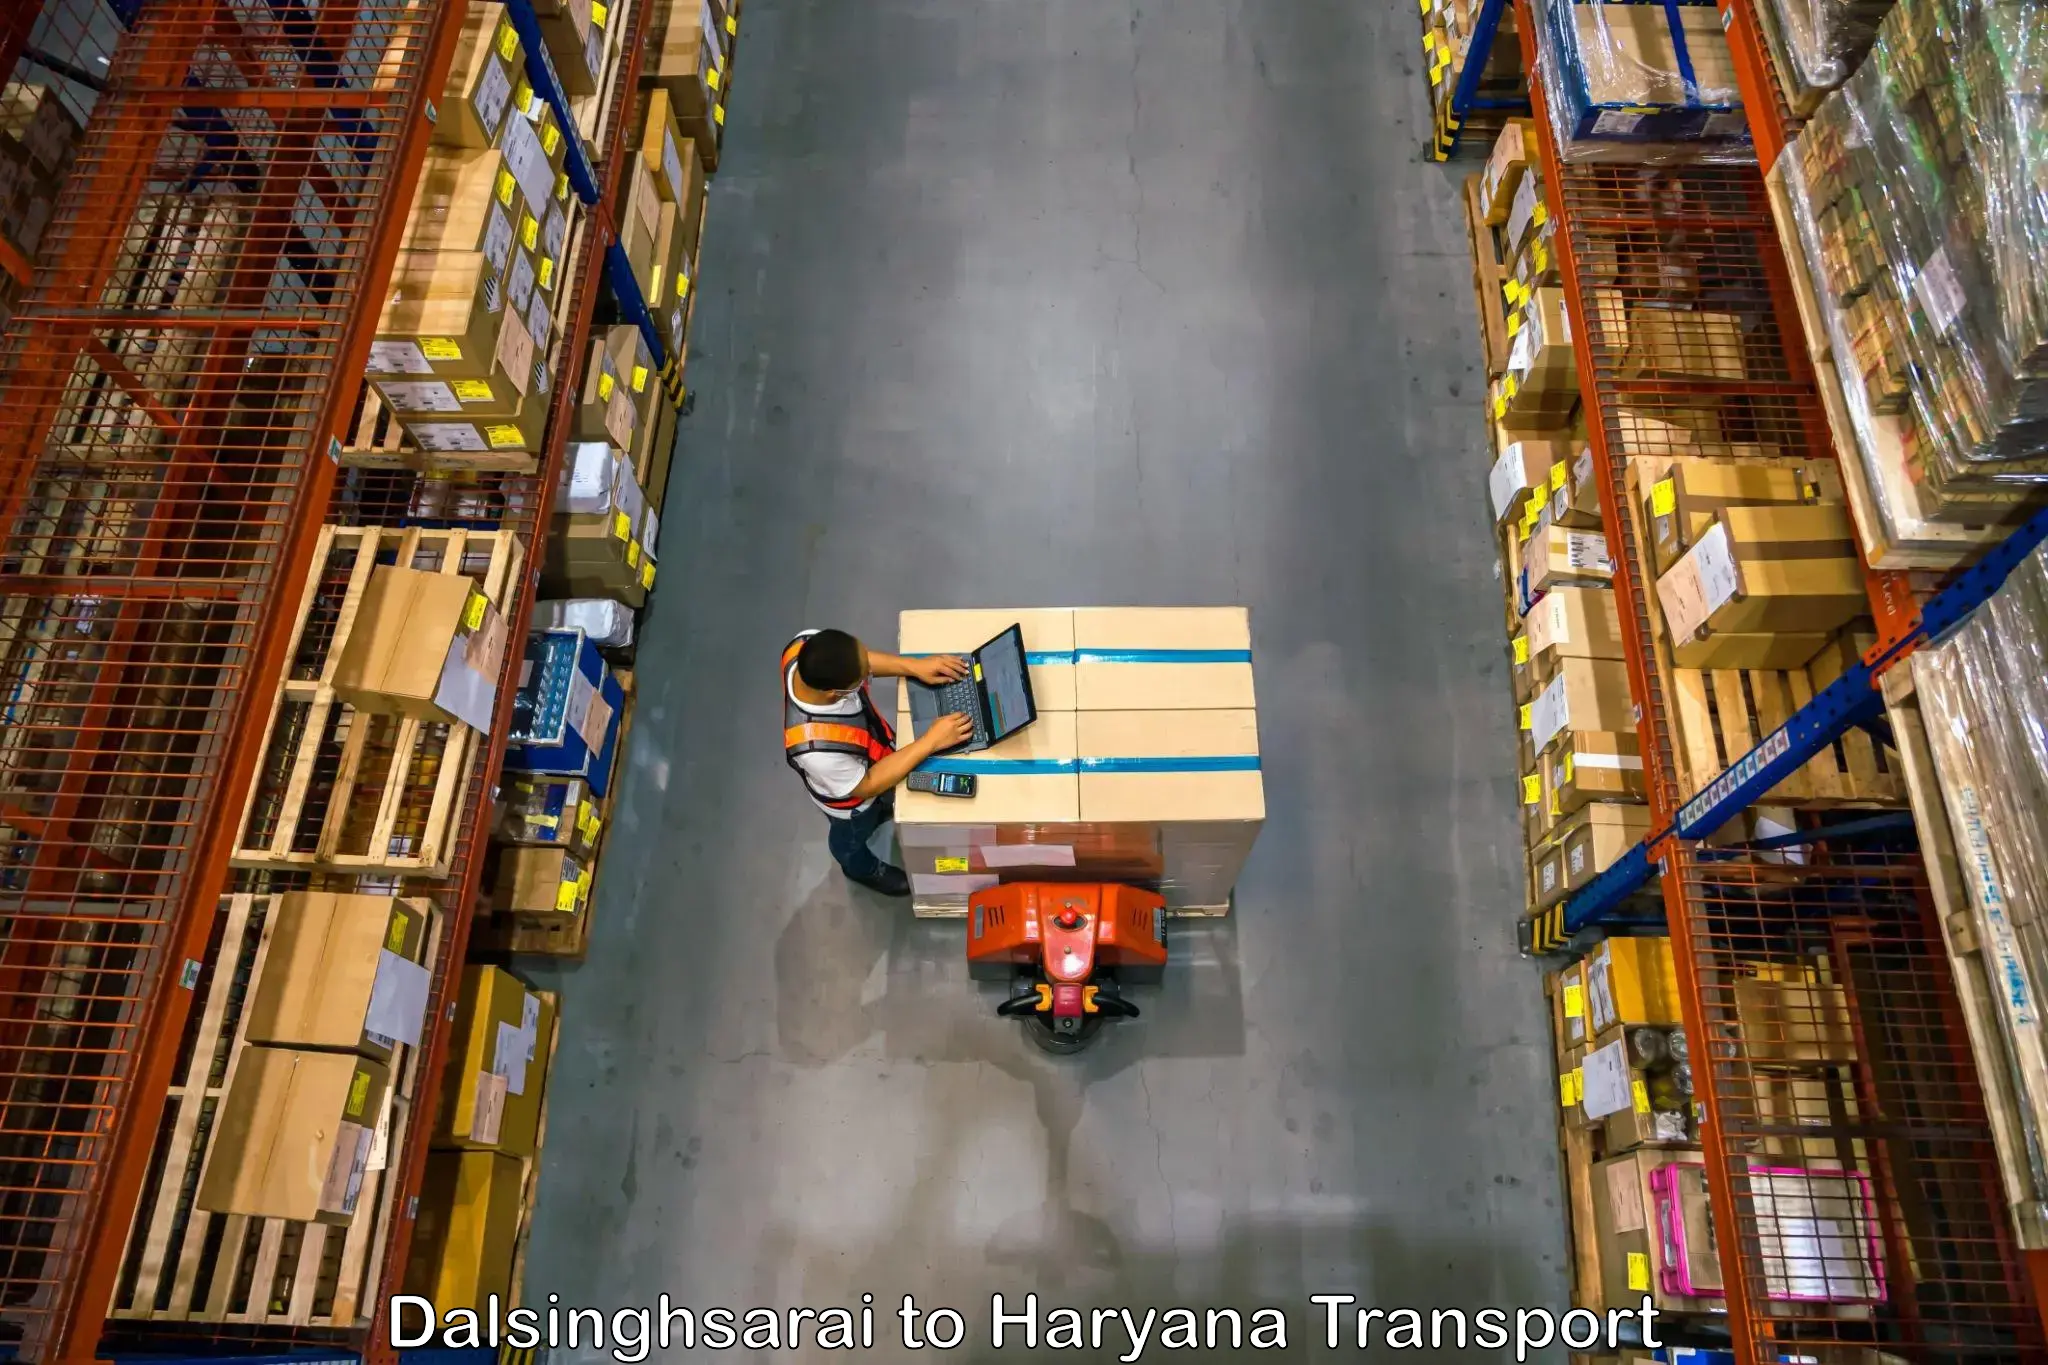 Part load transport service in India Dalsinghsarai to Bilaspur Haryana